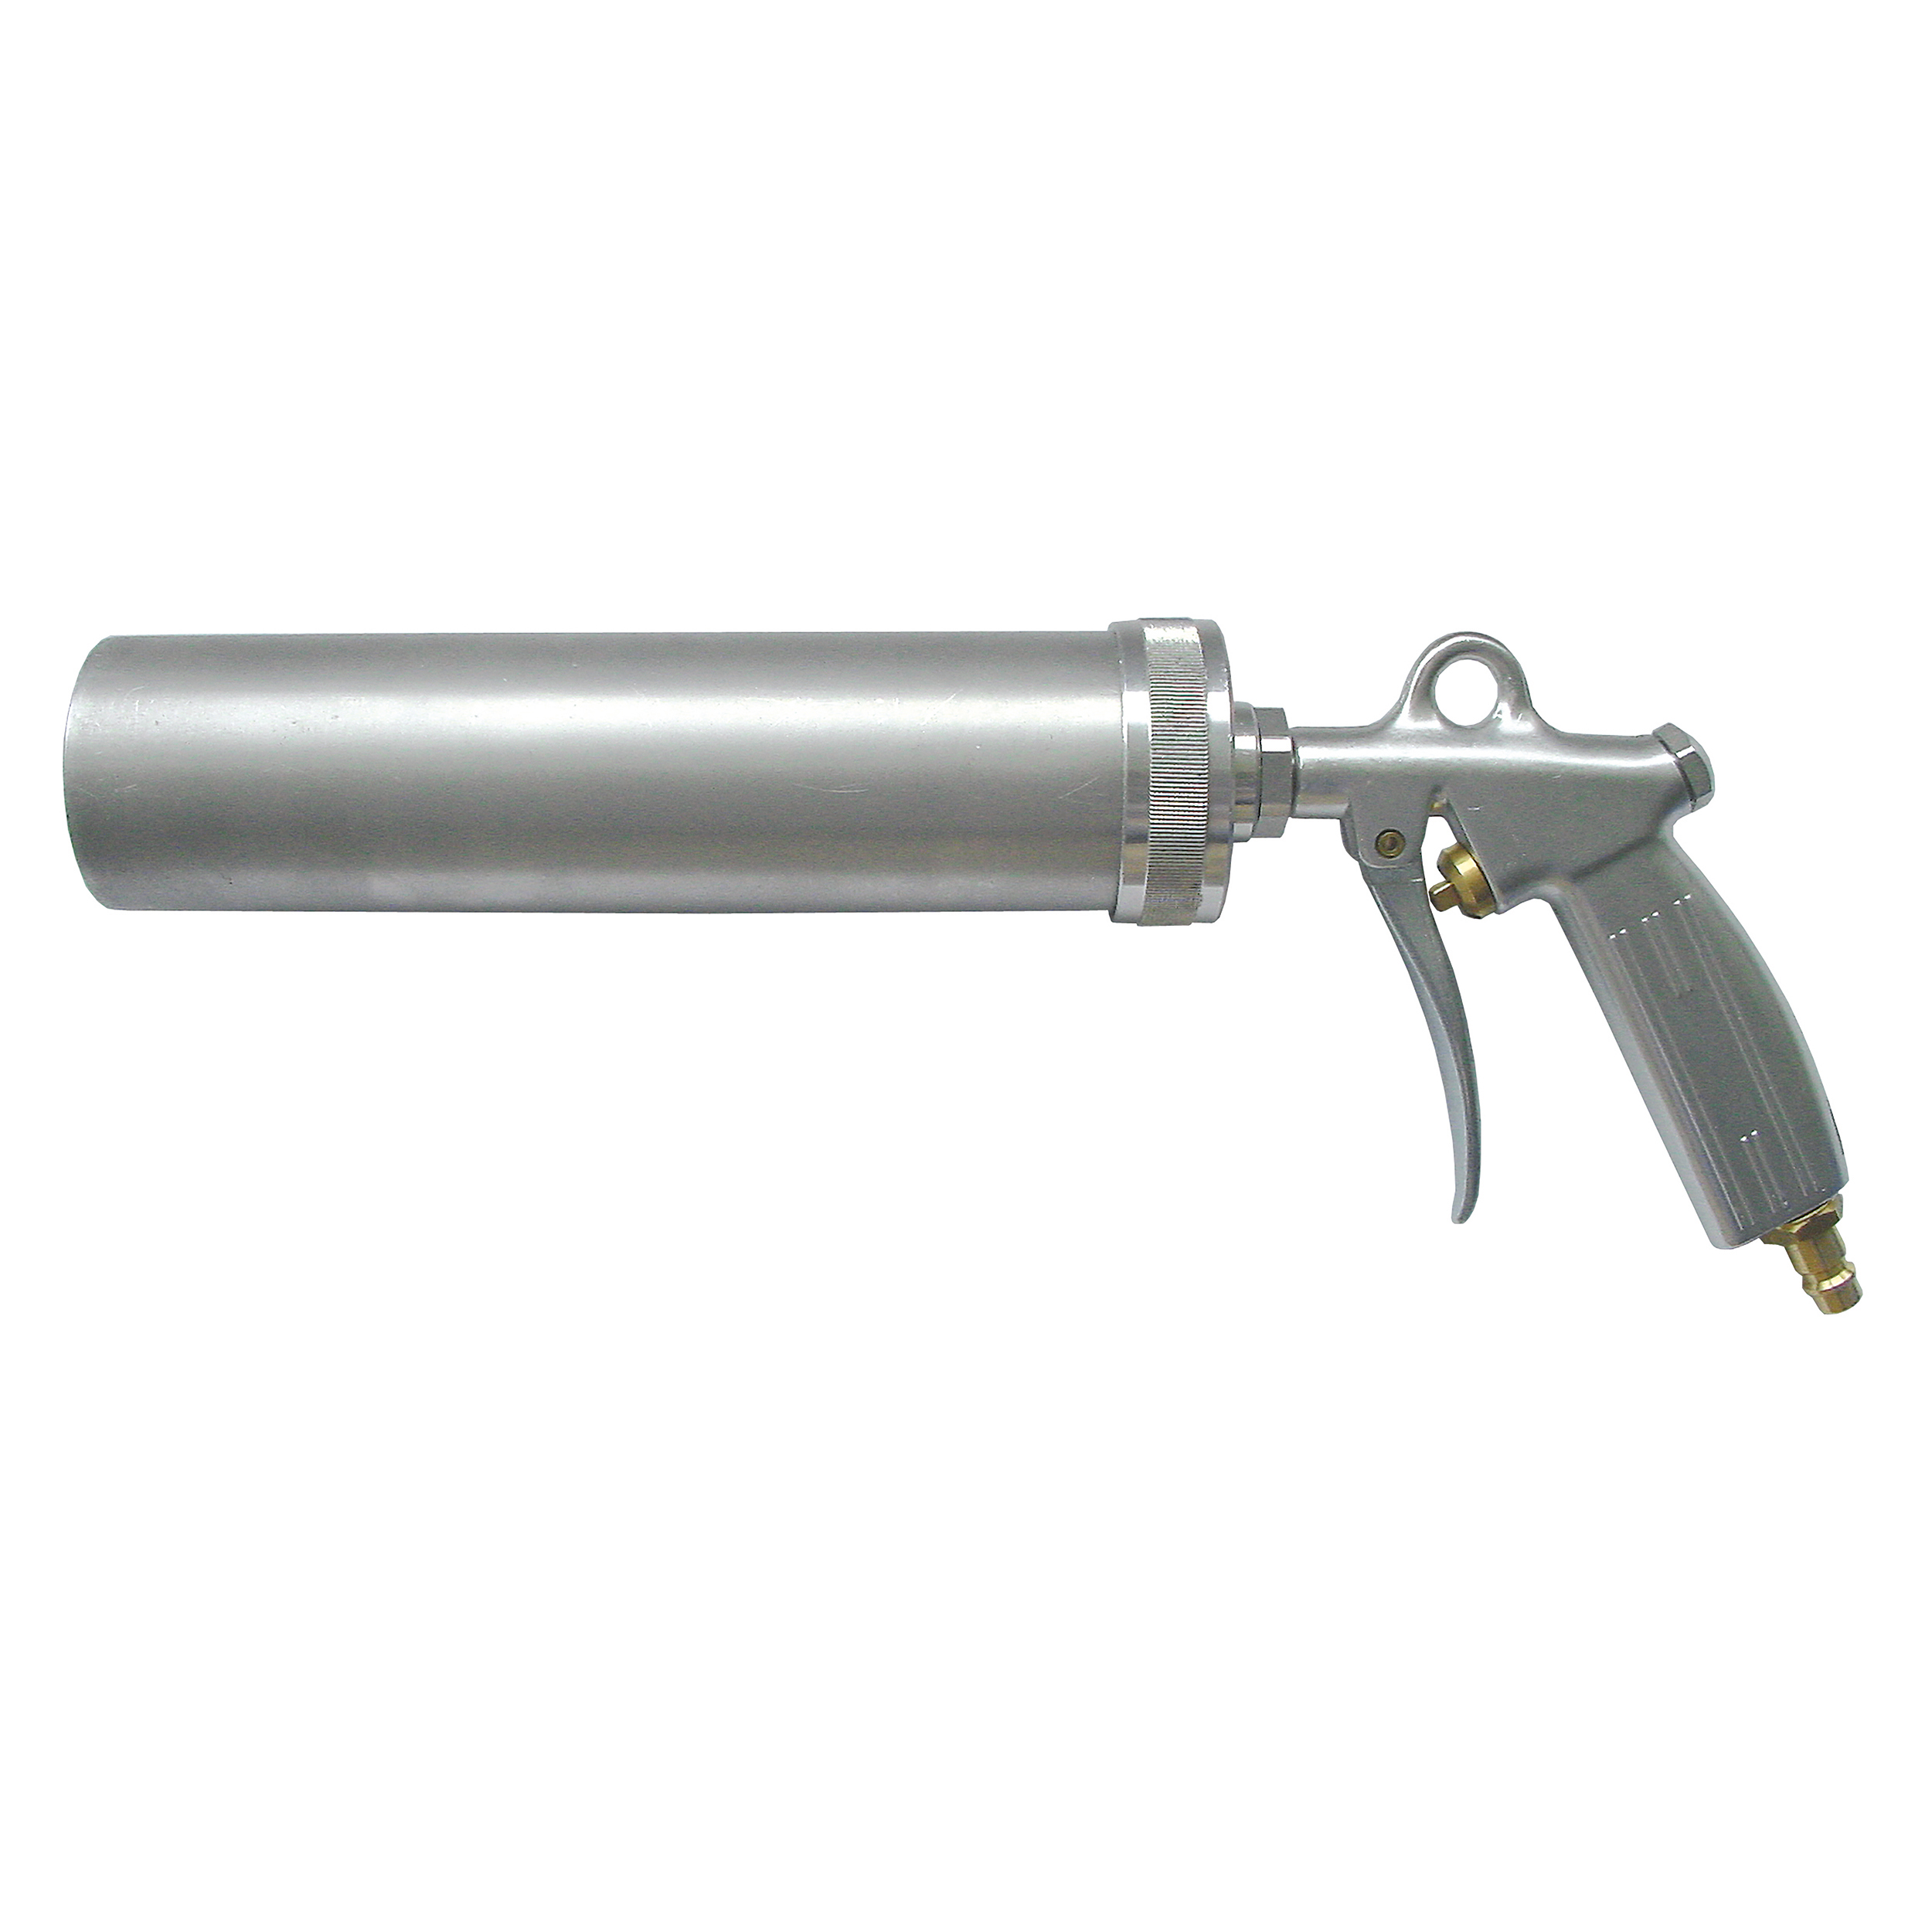 Druckluft-Kartuschenpistole, Pistolenkörper: Alu, geschm., Kupplungsstecker DN 7,2, Kartuschenhalter, MOP 8 bar, Gewicht: 660 g